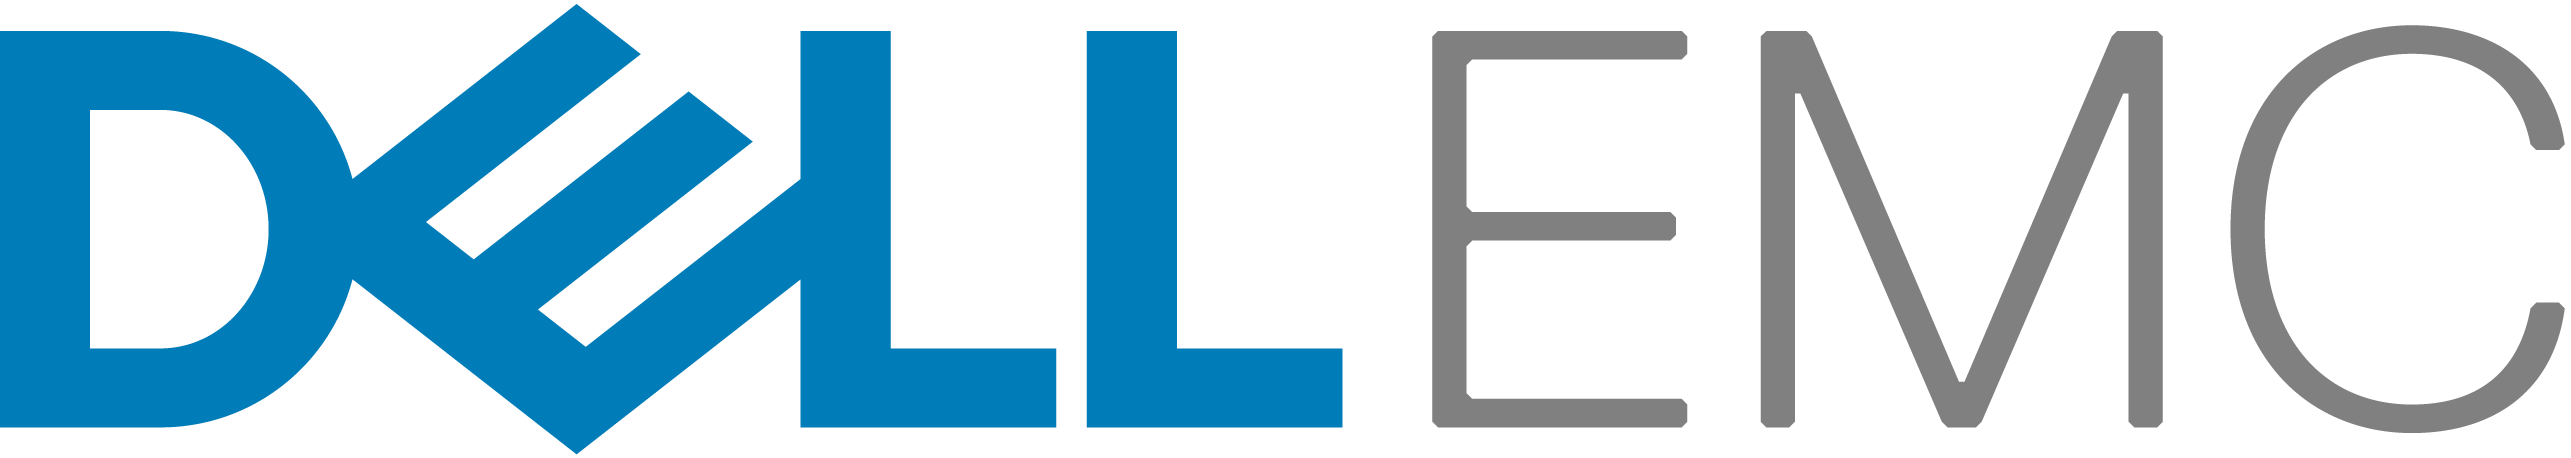 DELLEMC_Logo-1.png